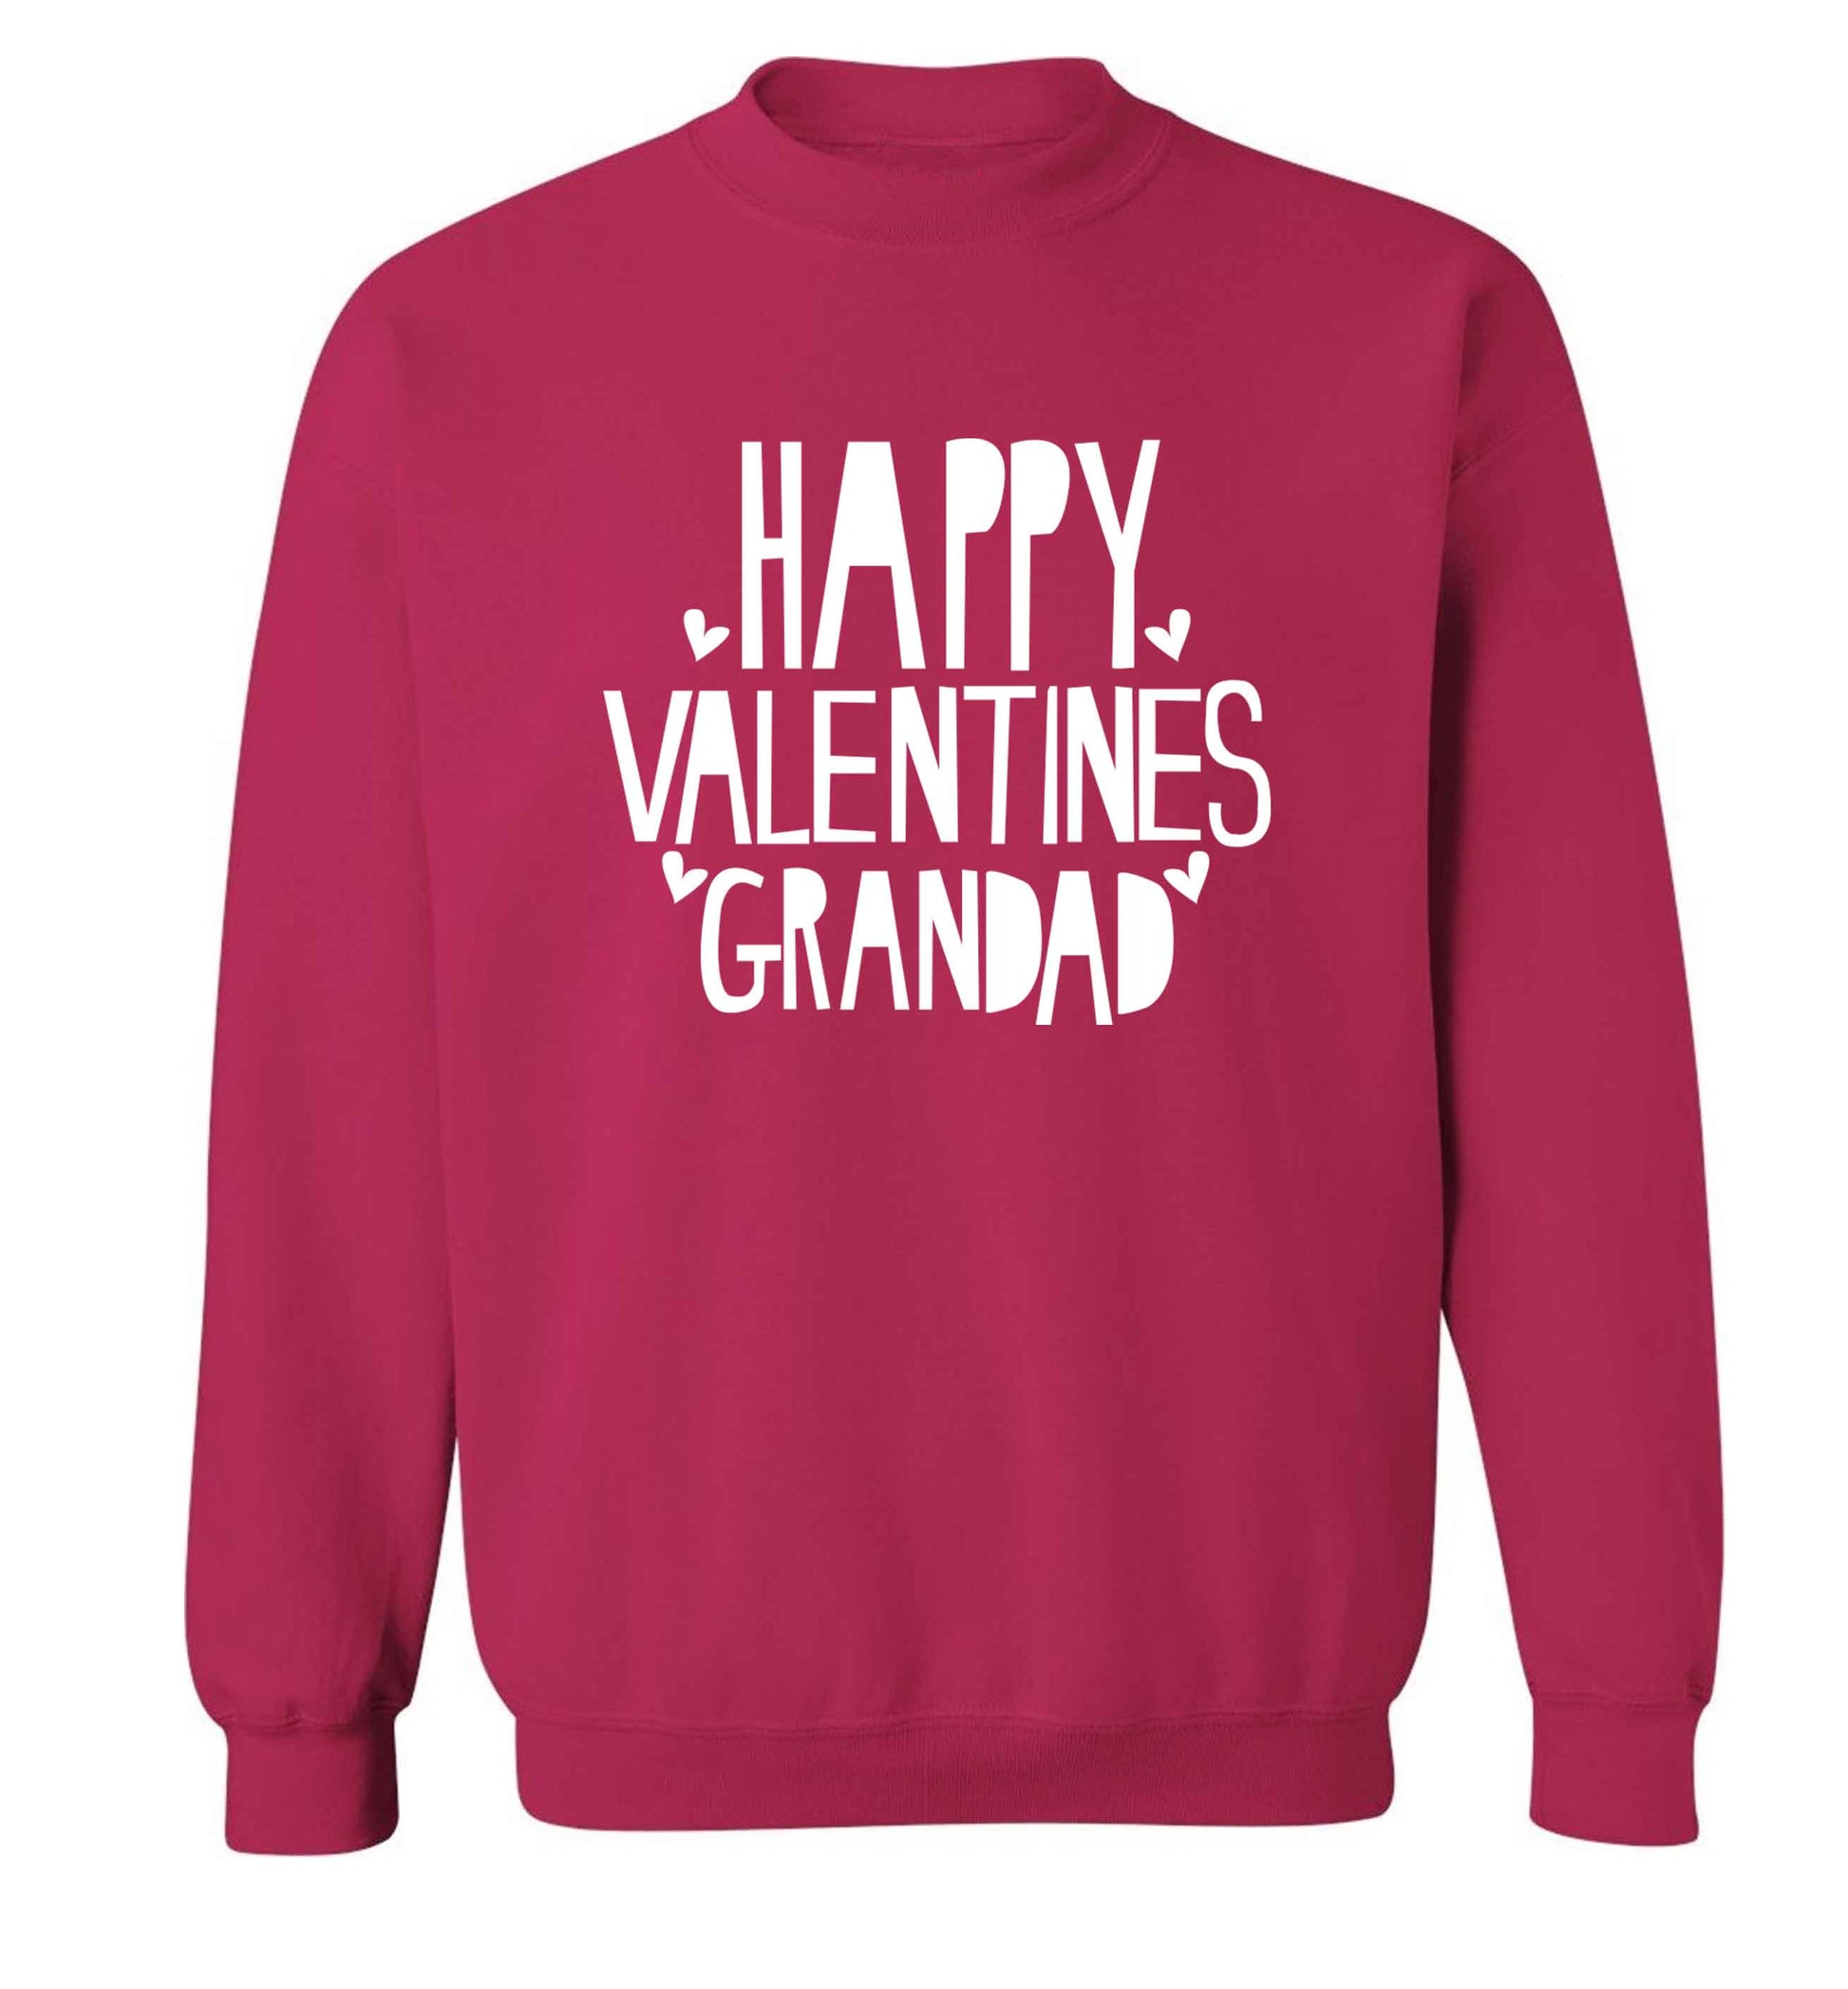 Happy valentines grandad adult's unisex pink sweater 2XL